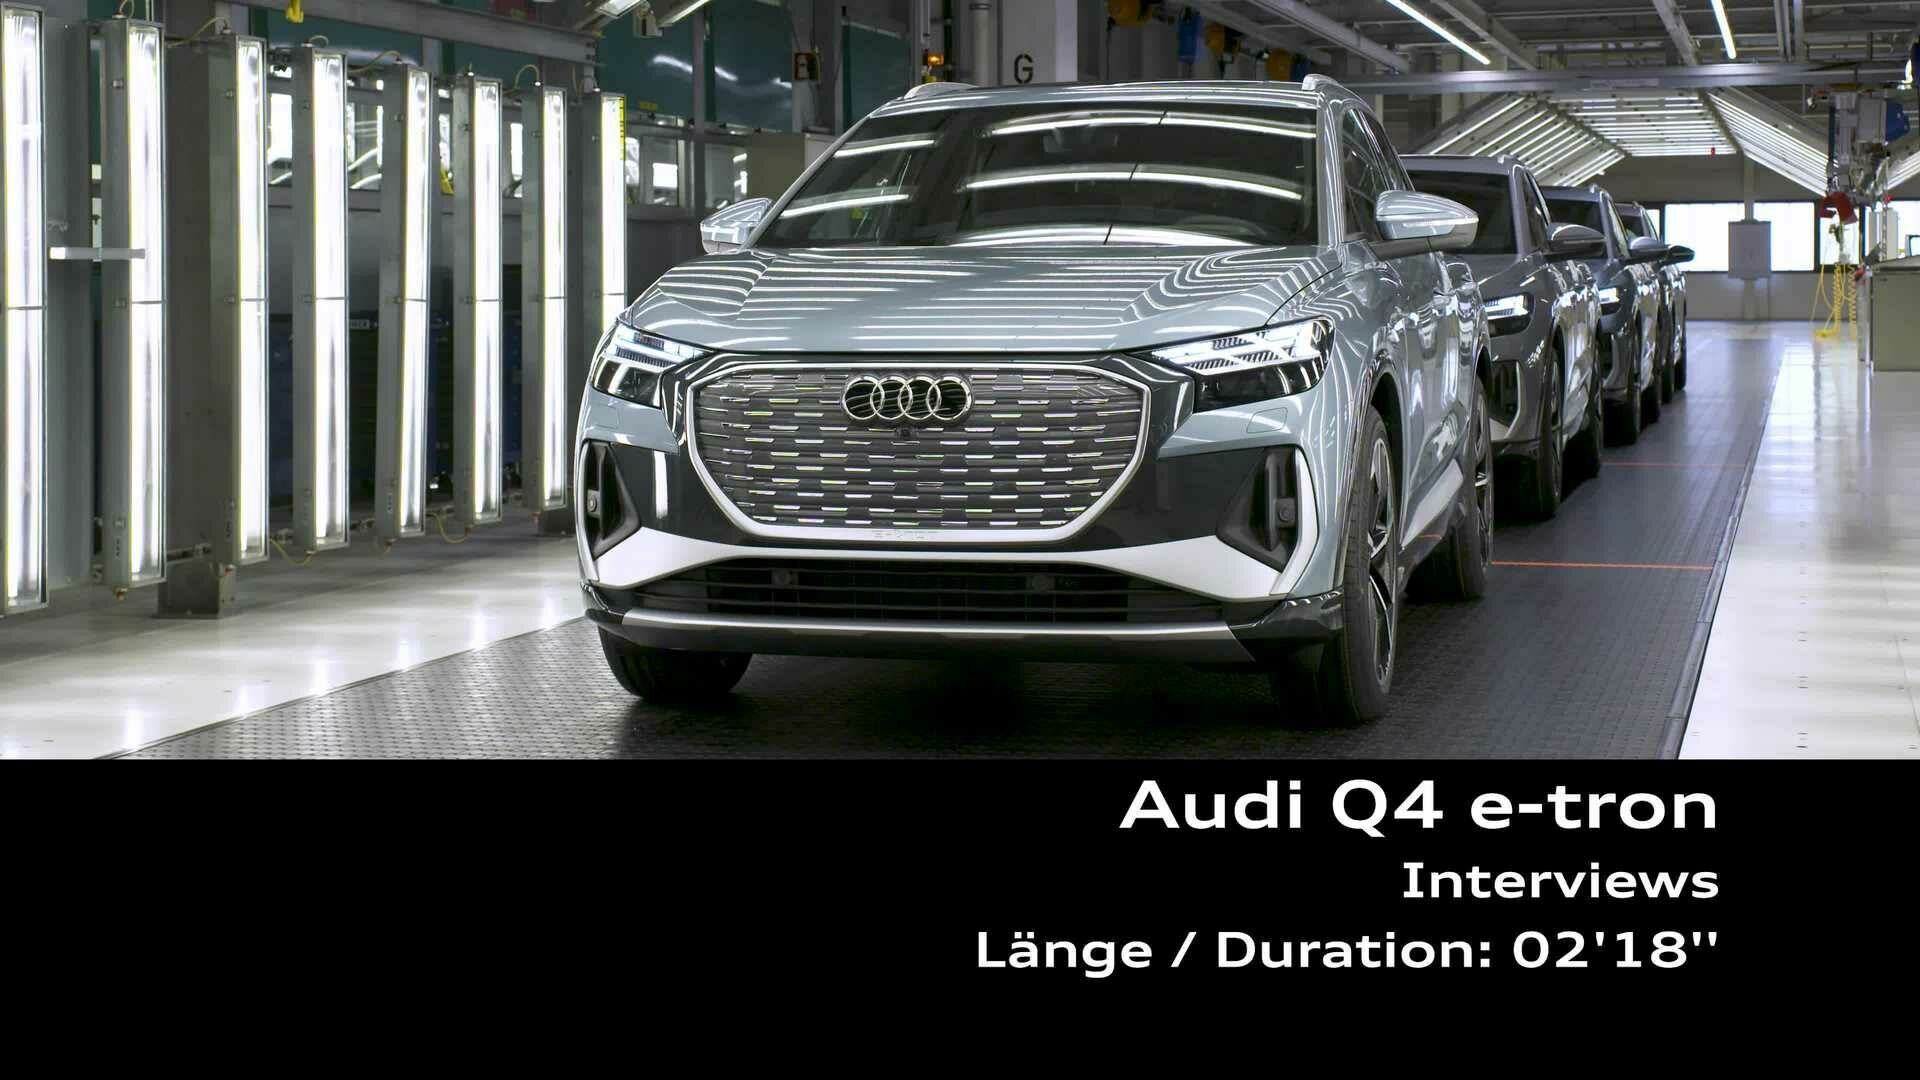 Footage: Audi Q4 e-tron - Interviews Peter Kössler, Thomas Haimerl, Dirk Greifeld